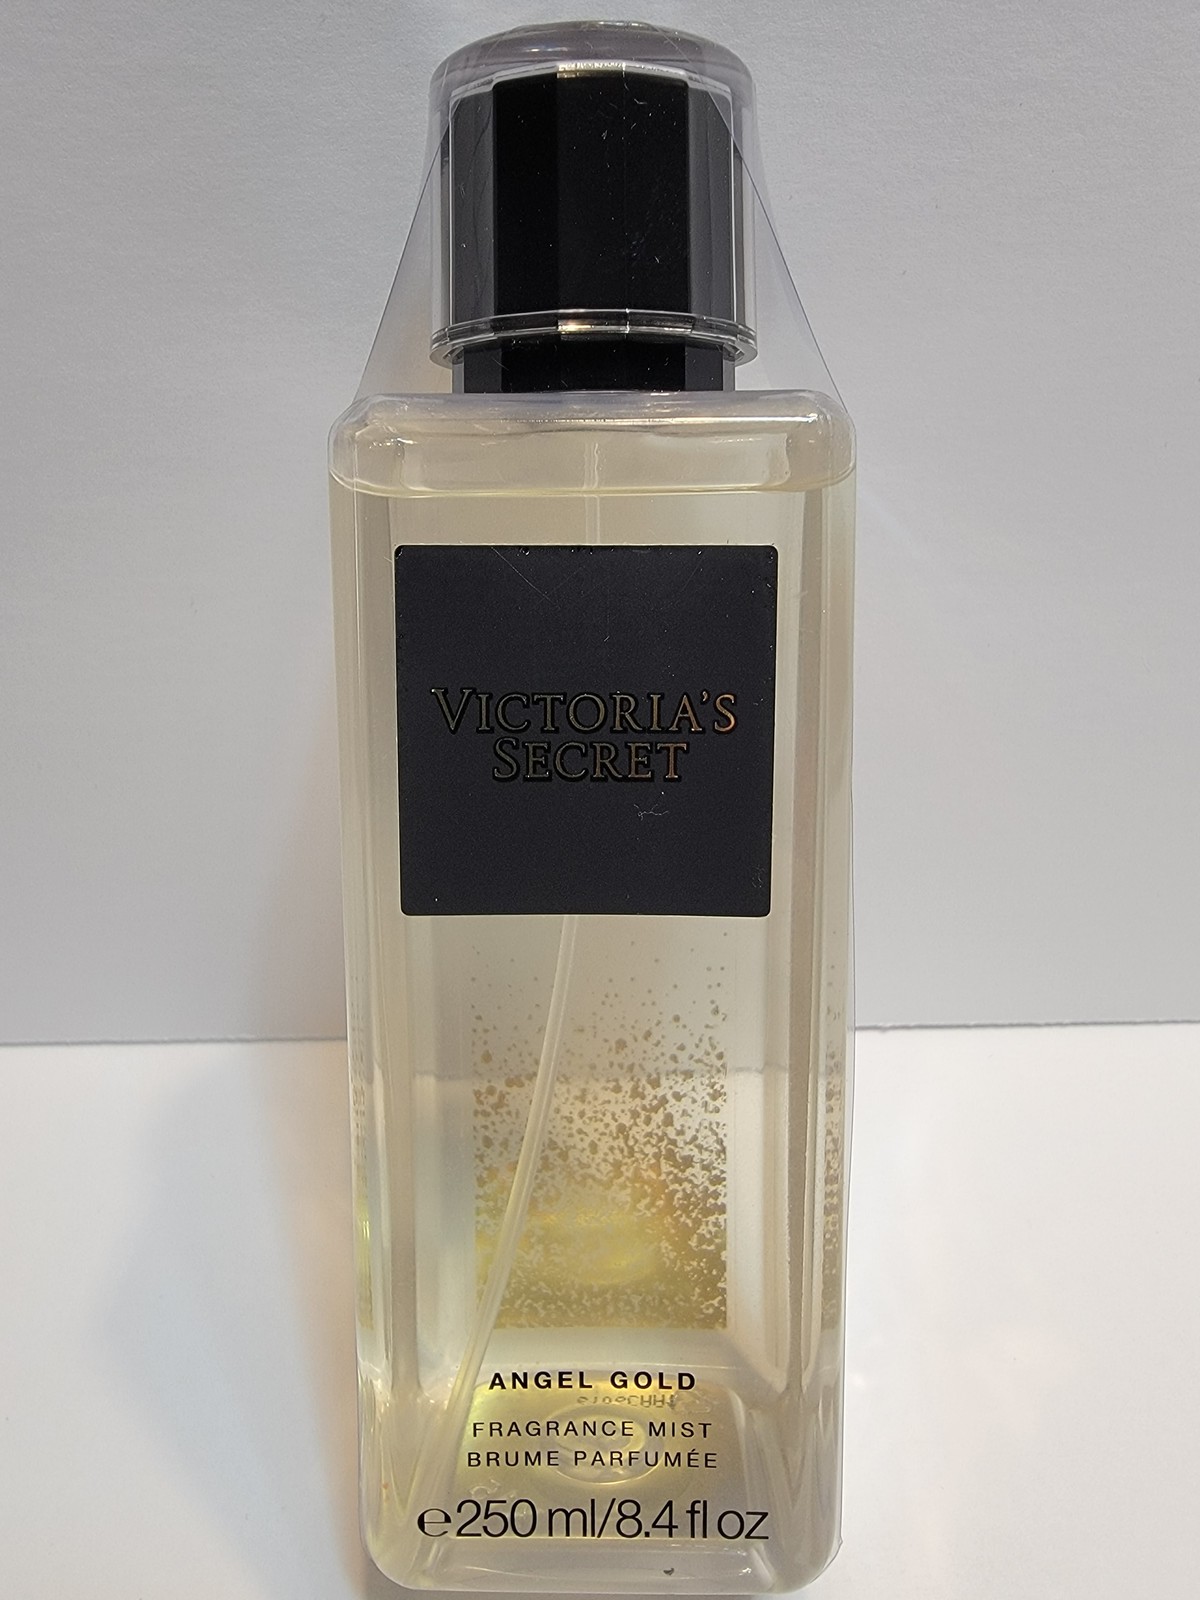 New Victoria's Secret Angel Gold Fragrance Body Mist 8.4 Oz NWT - $10.00